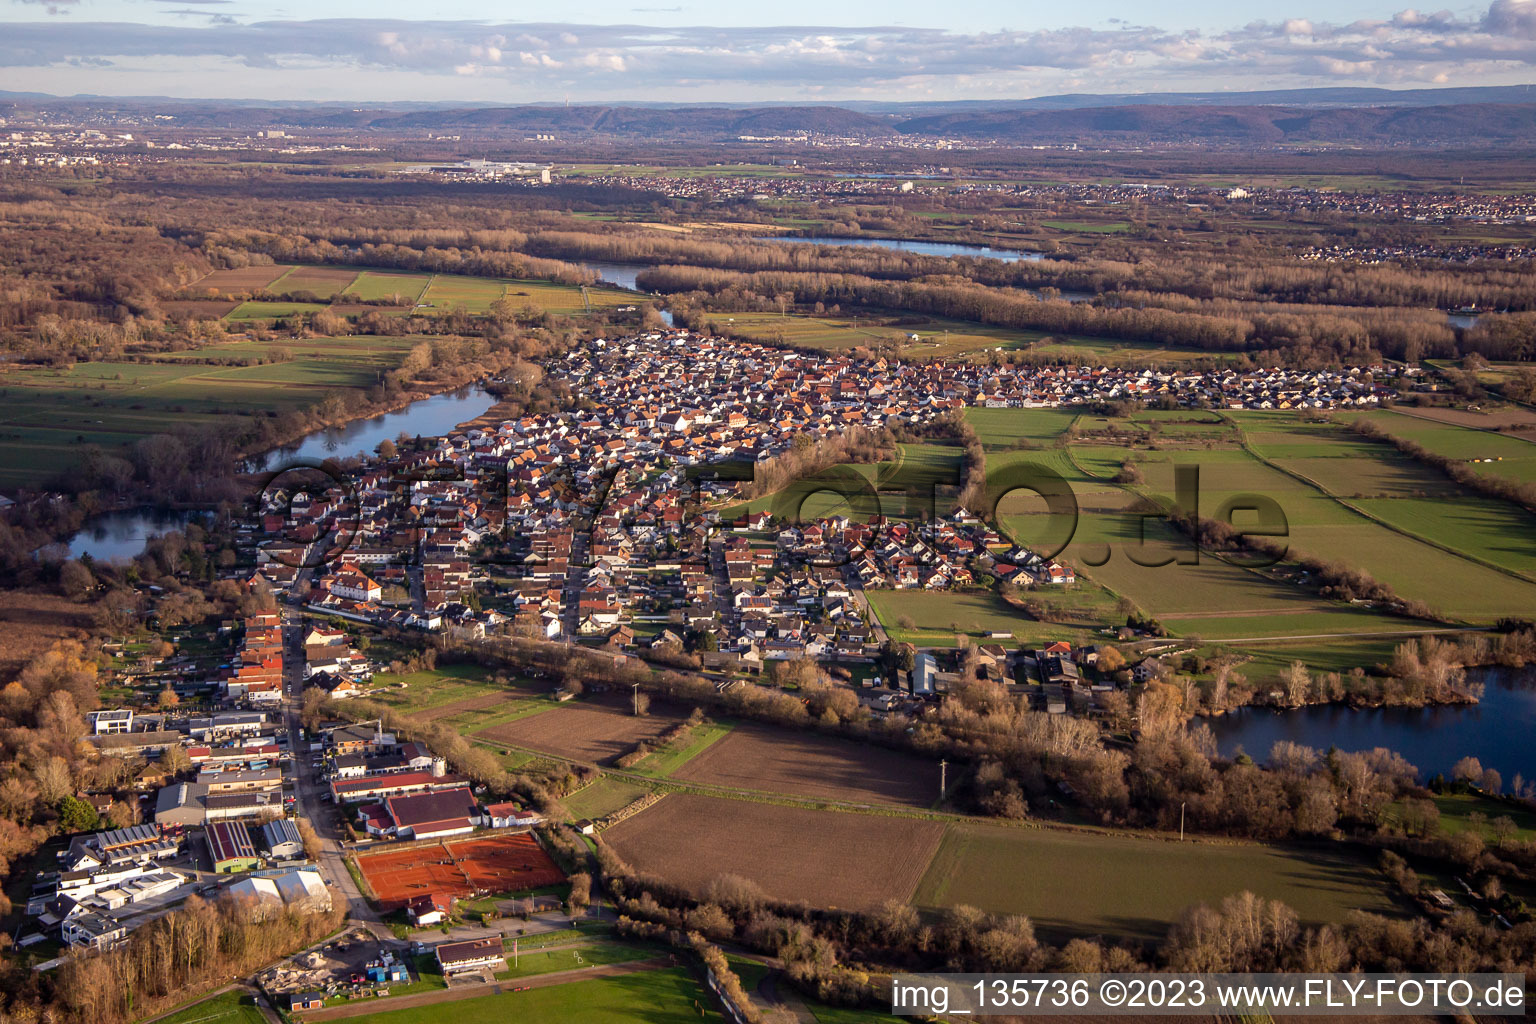 From the west in Neuburg am Rhein in the state Rhineland-Palatinate, Germany